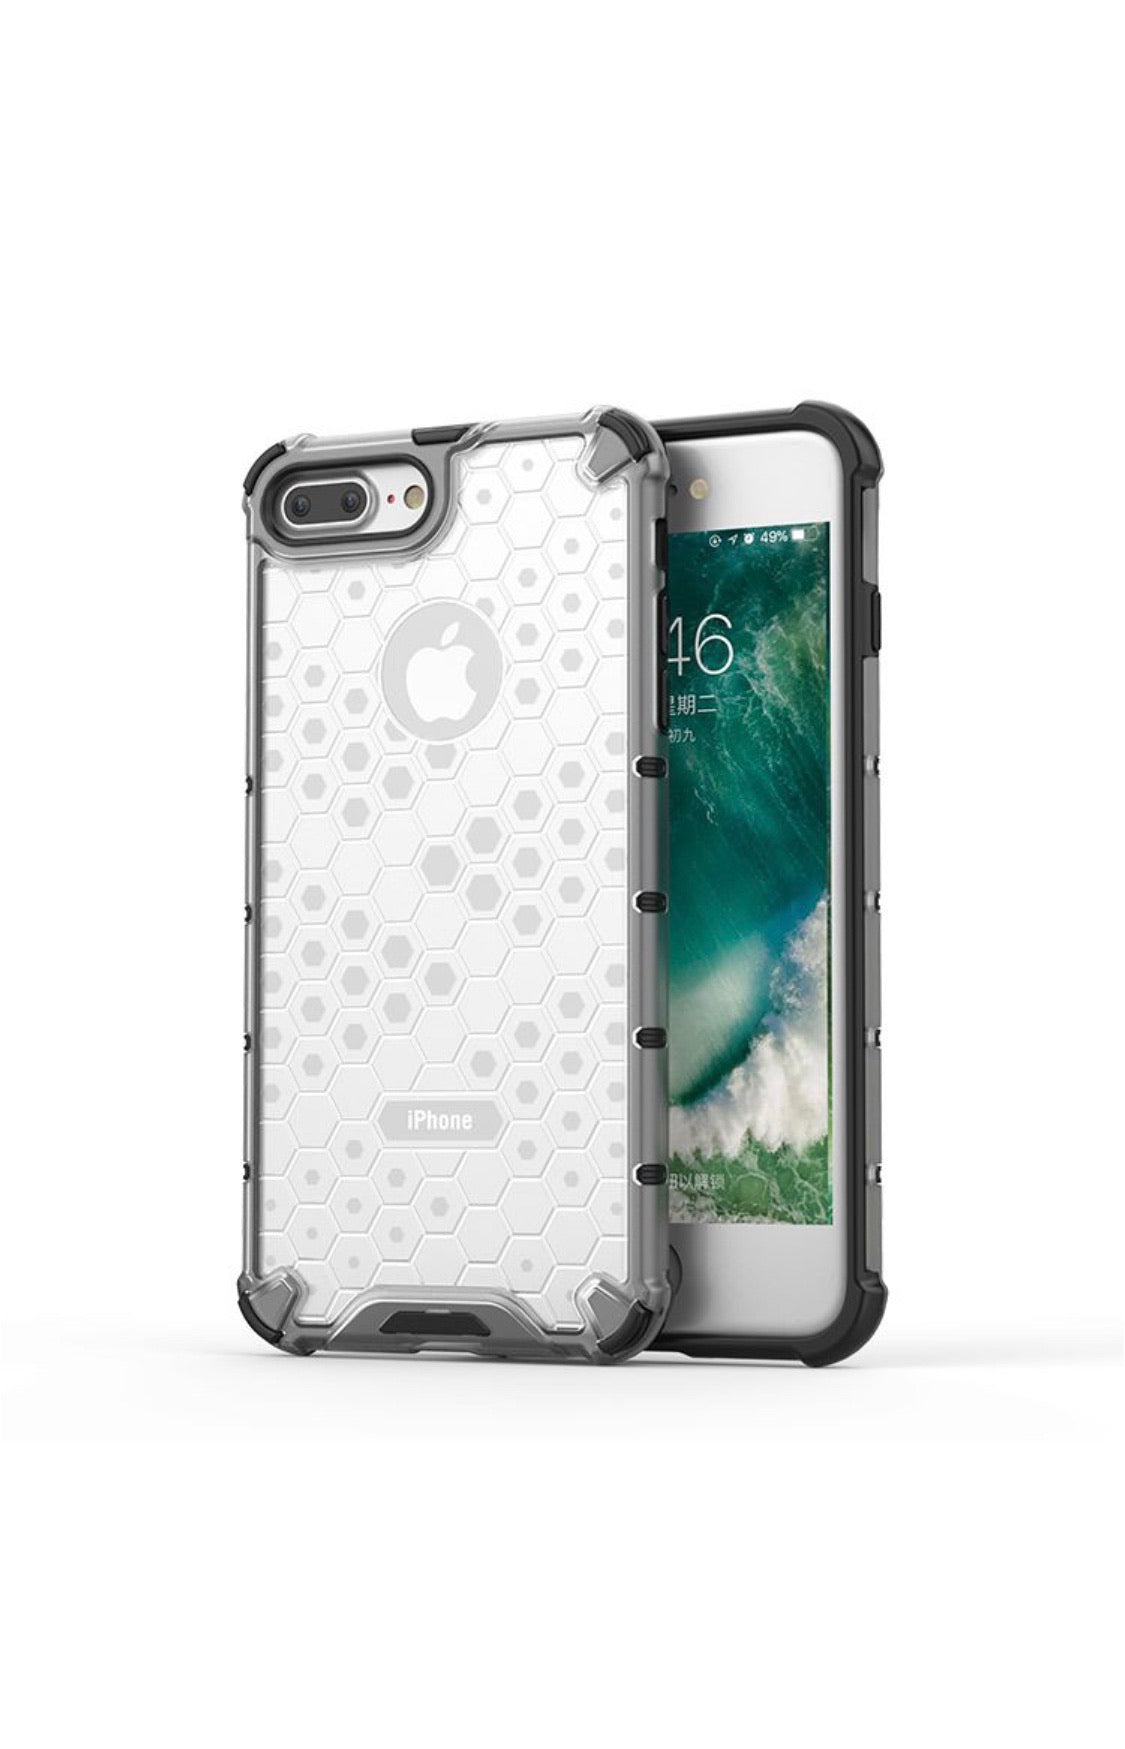 iPhone 7 Plus / 8 Plus Shockproof Honeycomb Cover Transparent